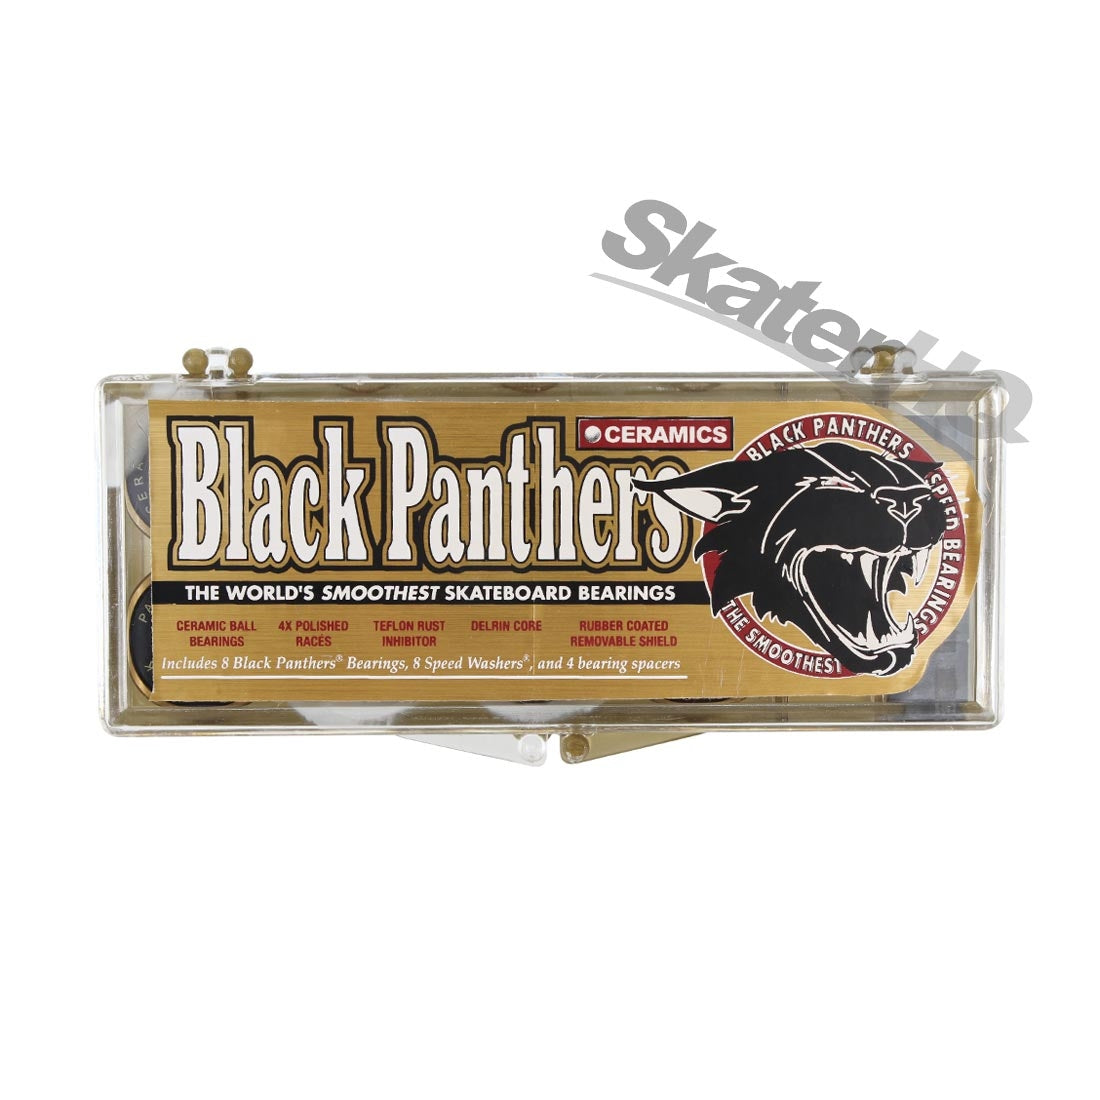 Black Panthers Ceramic Bearings Skateboard Bearings